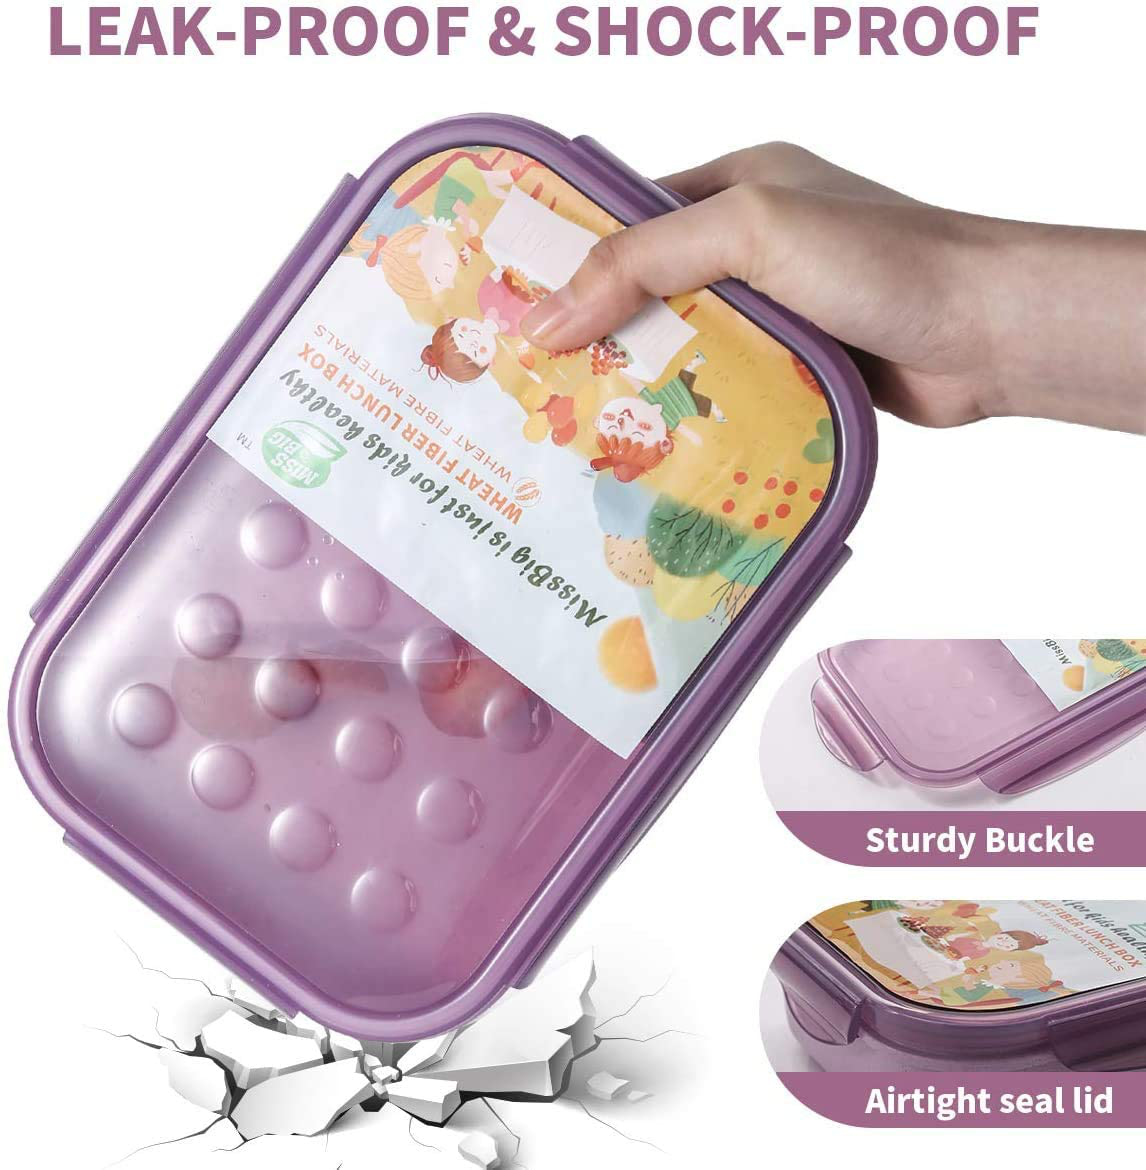  MISS BIG Bento Box, Lunch Box Kids,Ideal Leak Proof